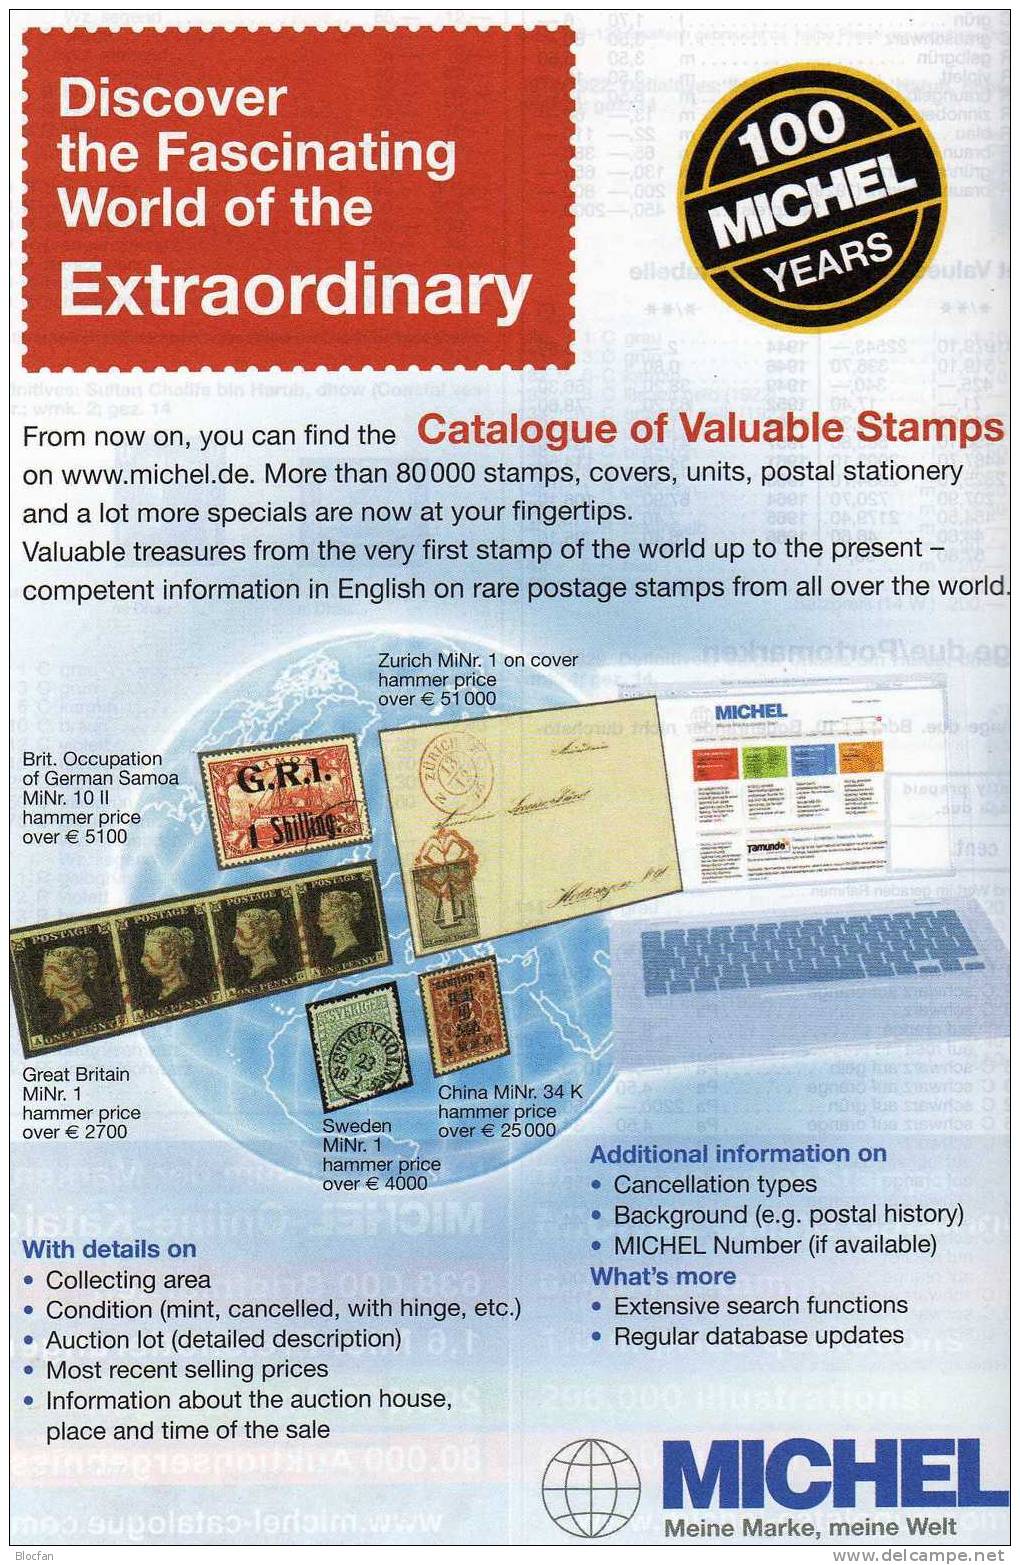 Valuable Stamps Of The World 2010 New 50€ Briefmarken Wertvolle Marken Der Welt MICHEL With ESPANA - Altri & Non Classificati